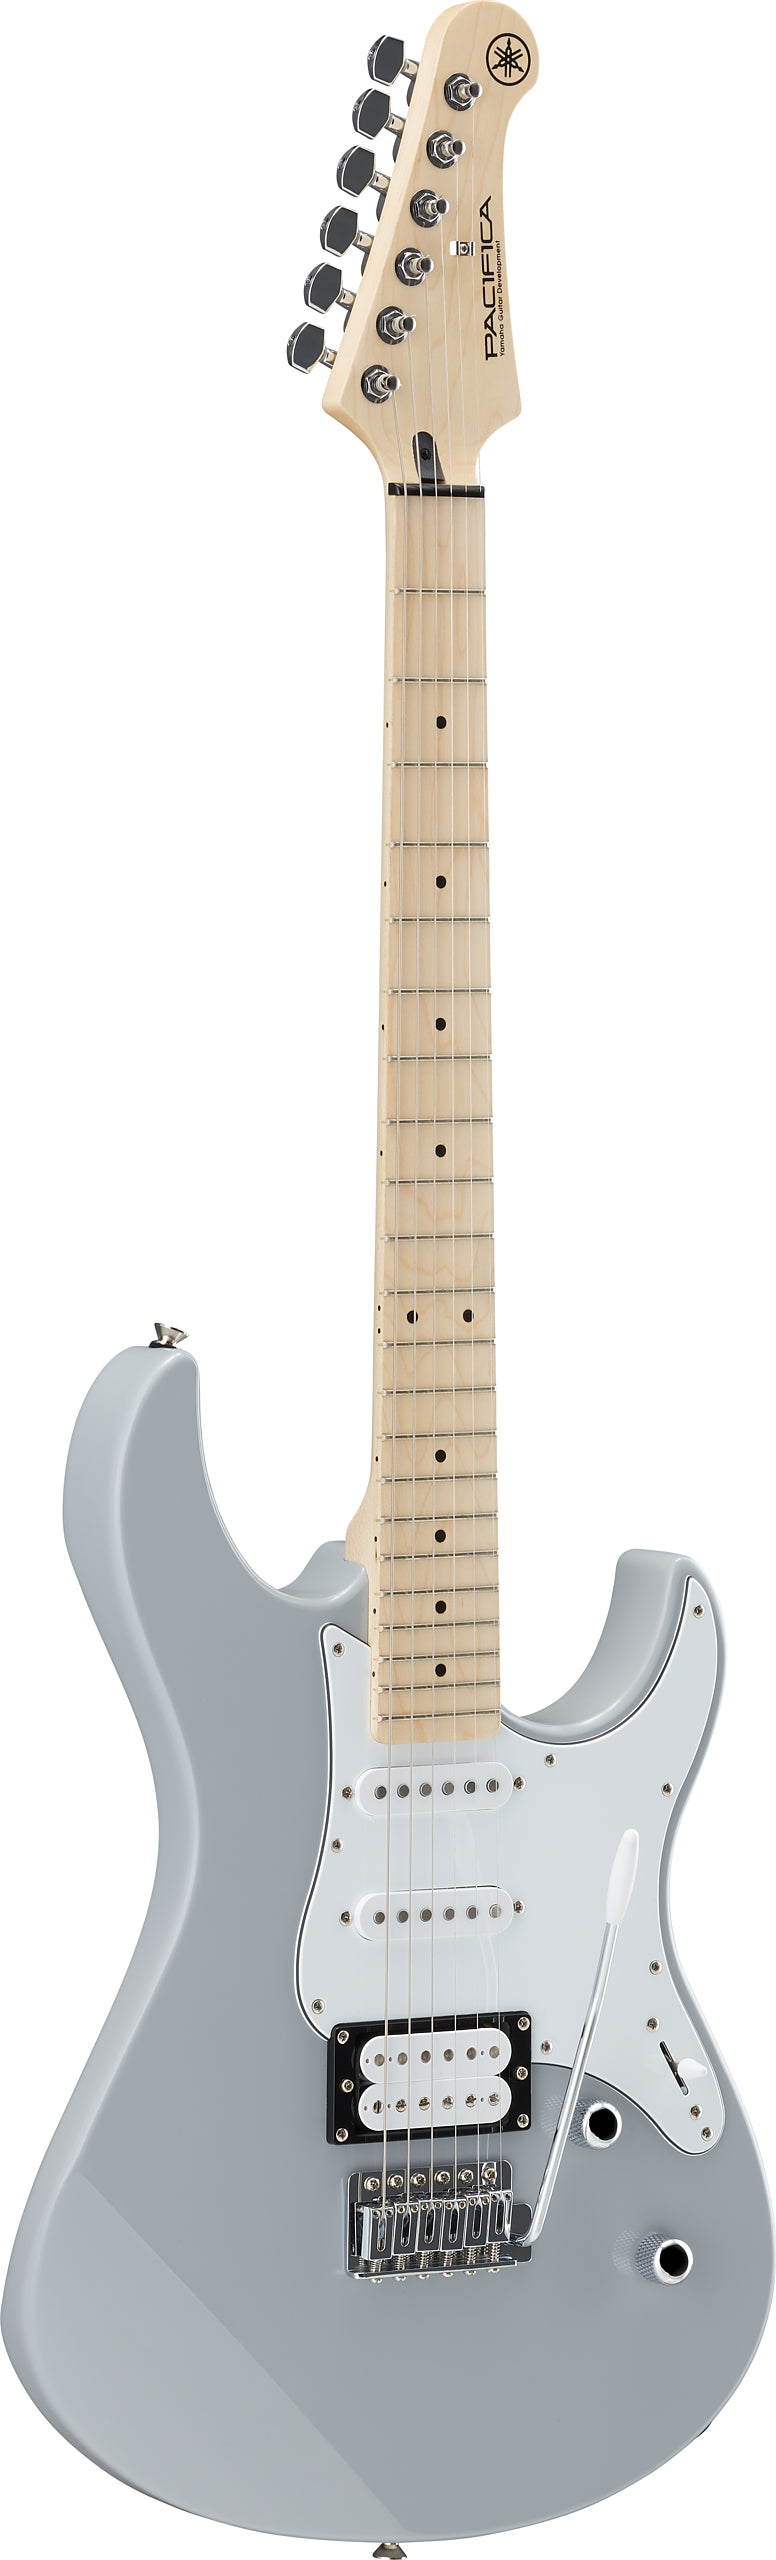 Yamaha Pacifica Electric Guitar PAC112VM